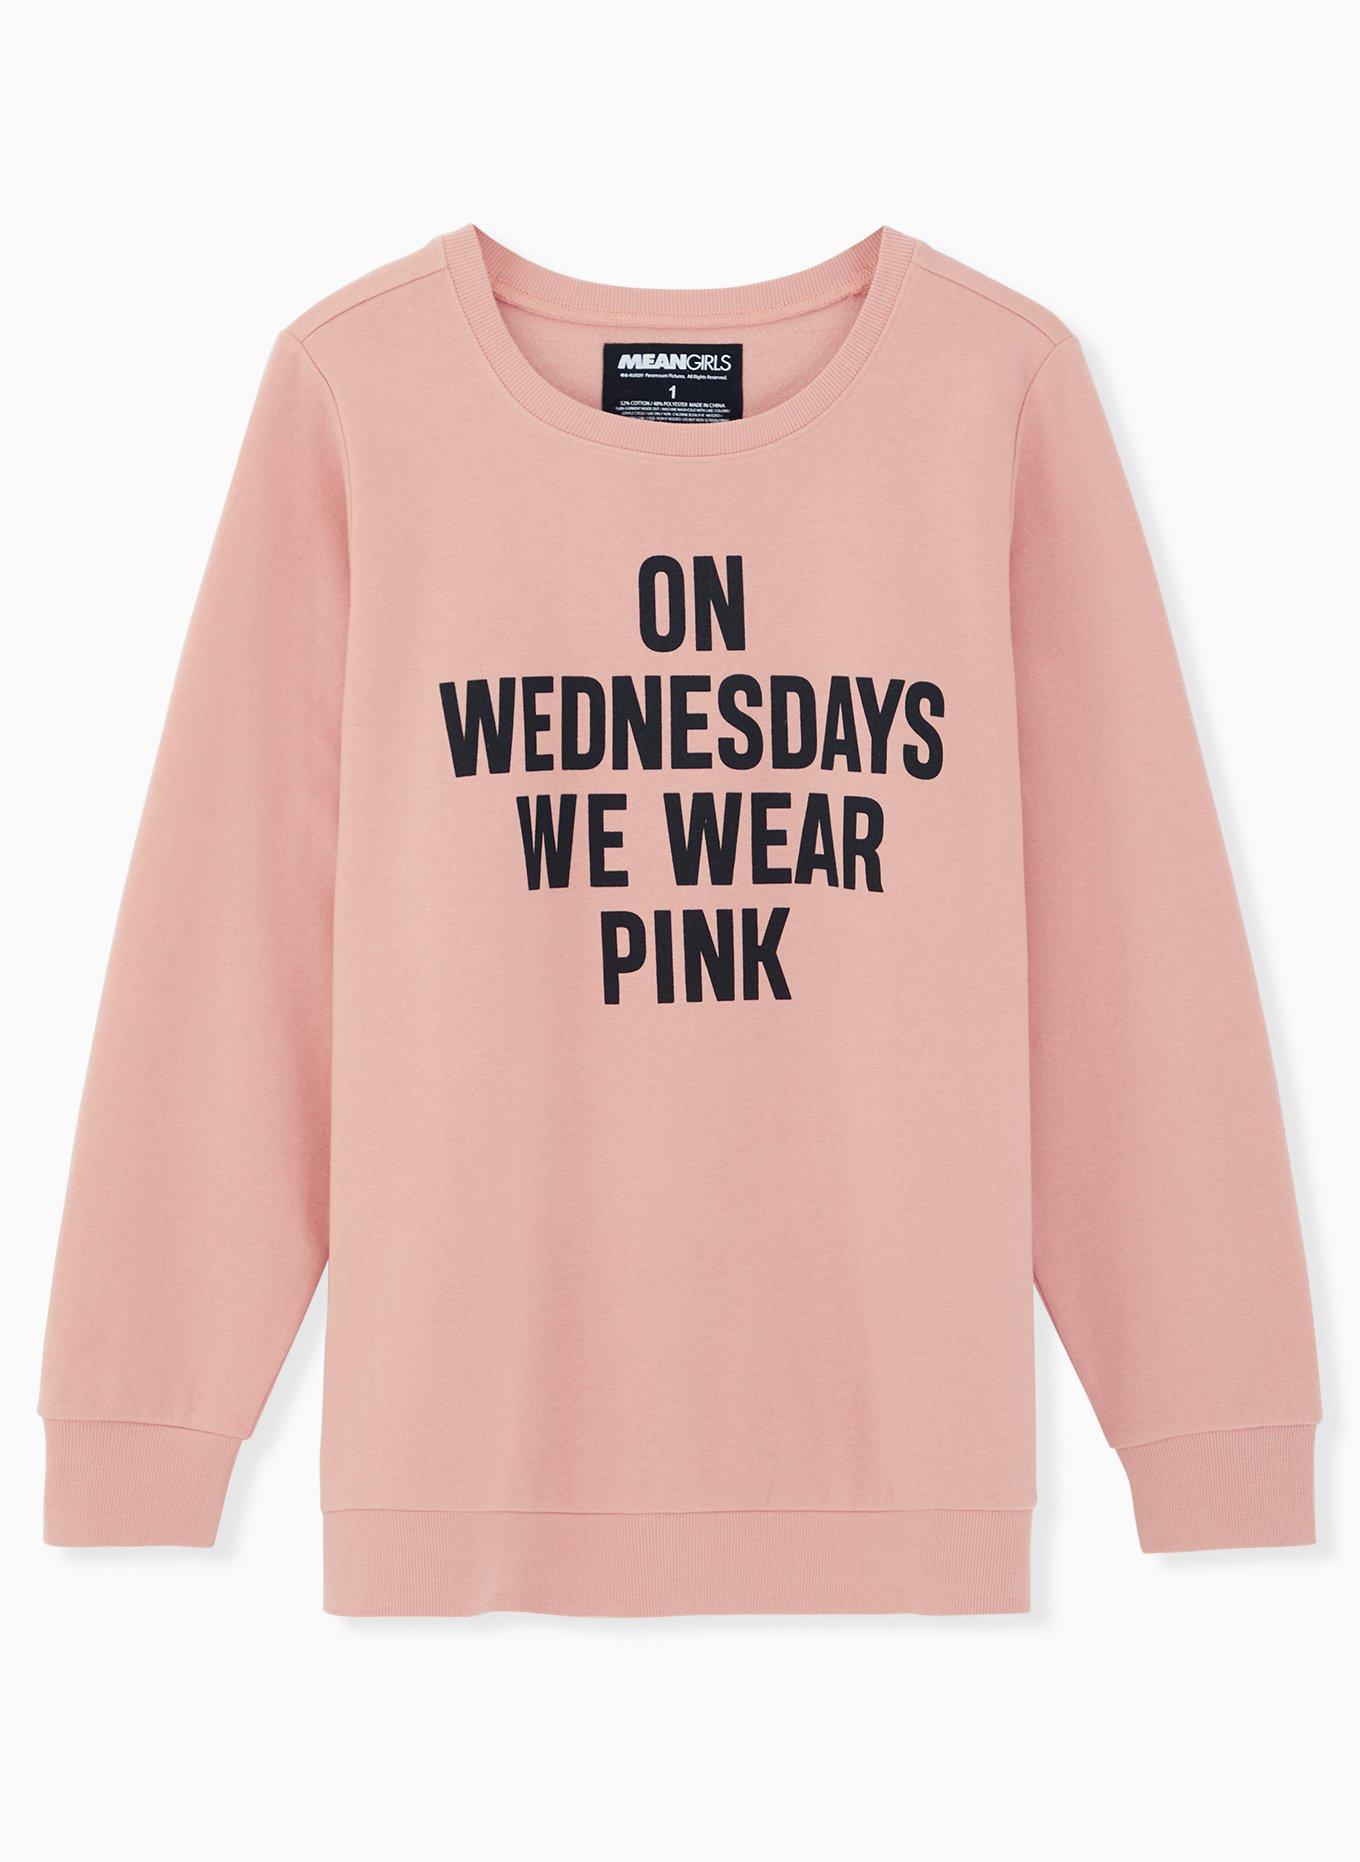 PINK - Victoria's Secret Pink Brand Jogger Sweats Size M - $11 (78